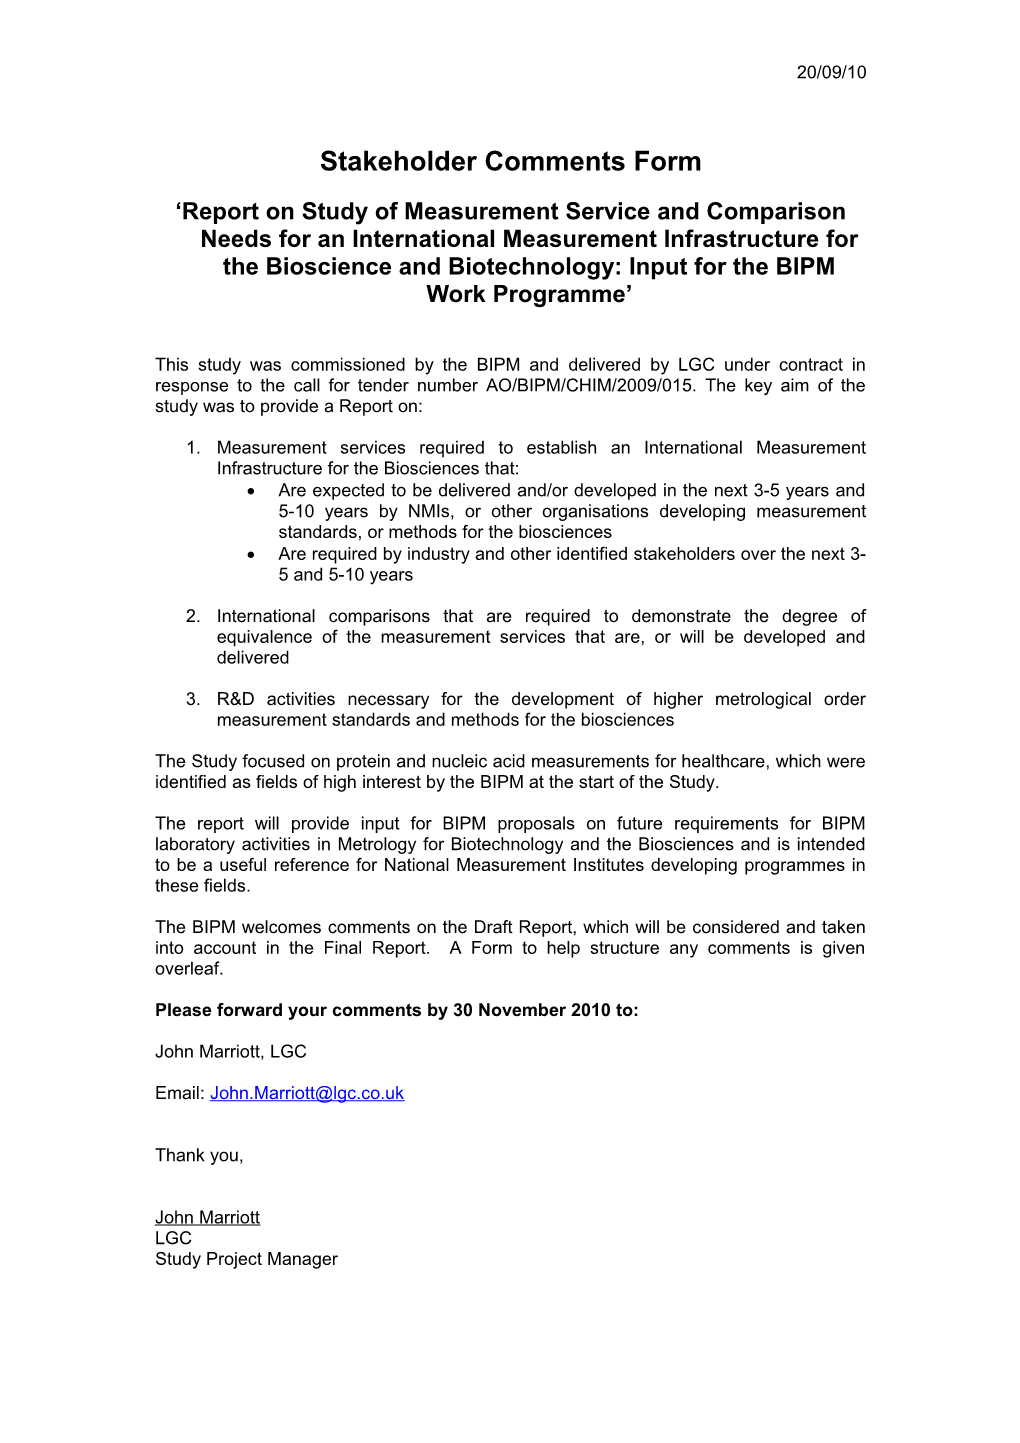 BIPM Bio-Measurement Study Response Form